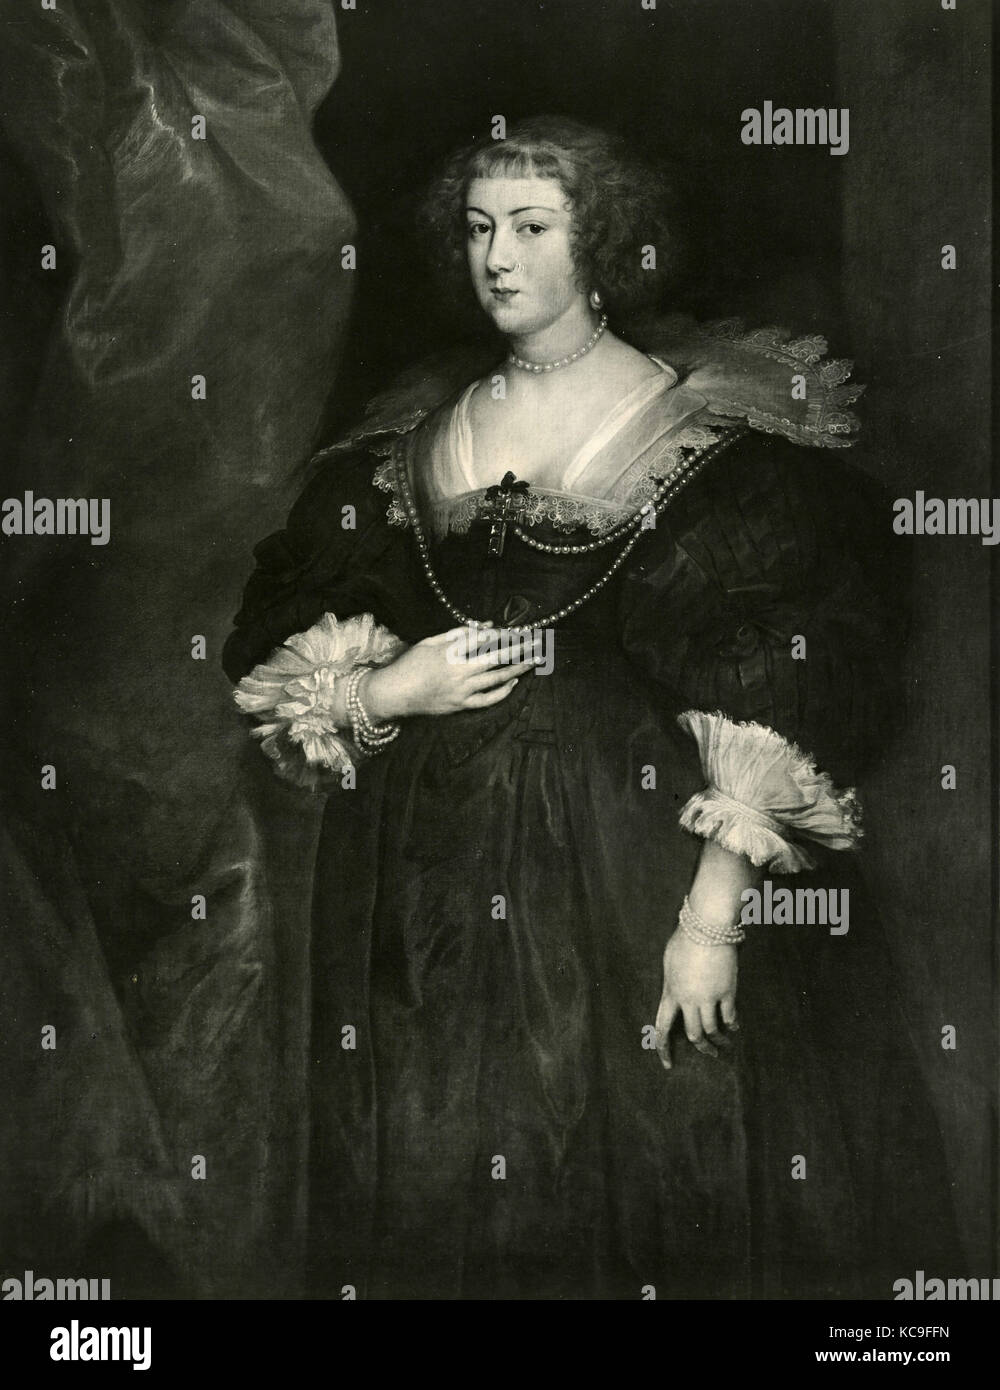 Ritratto di Amalia di Solms-Braunfels principessa d'arancio, dipinto di Van Dyck Foto Stock